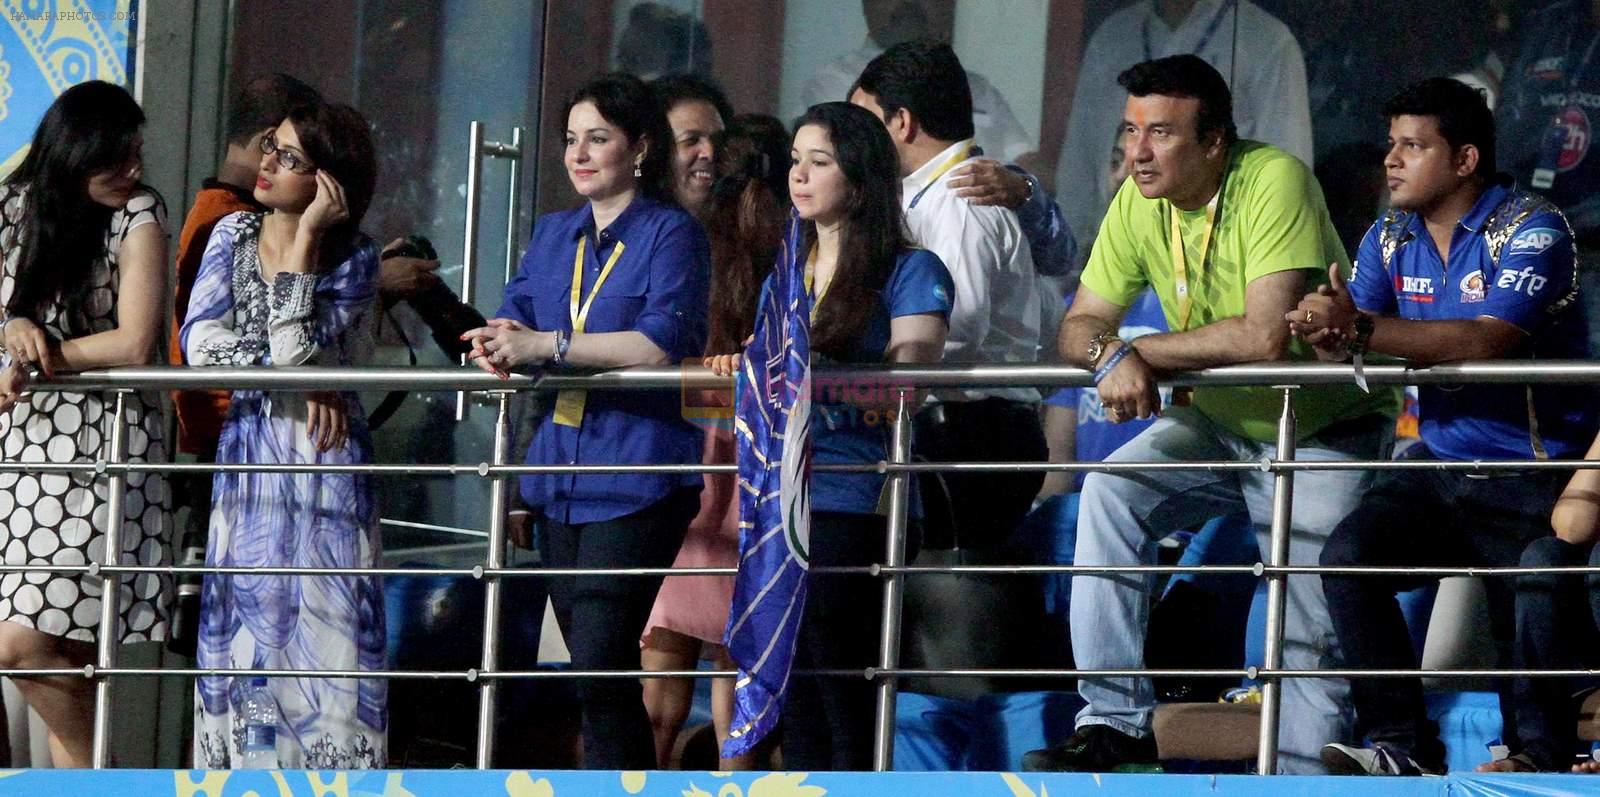 Anjali Tendulkar cheering Mumbai Indians on 24th May 2015